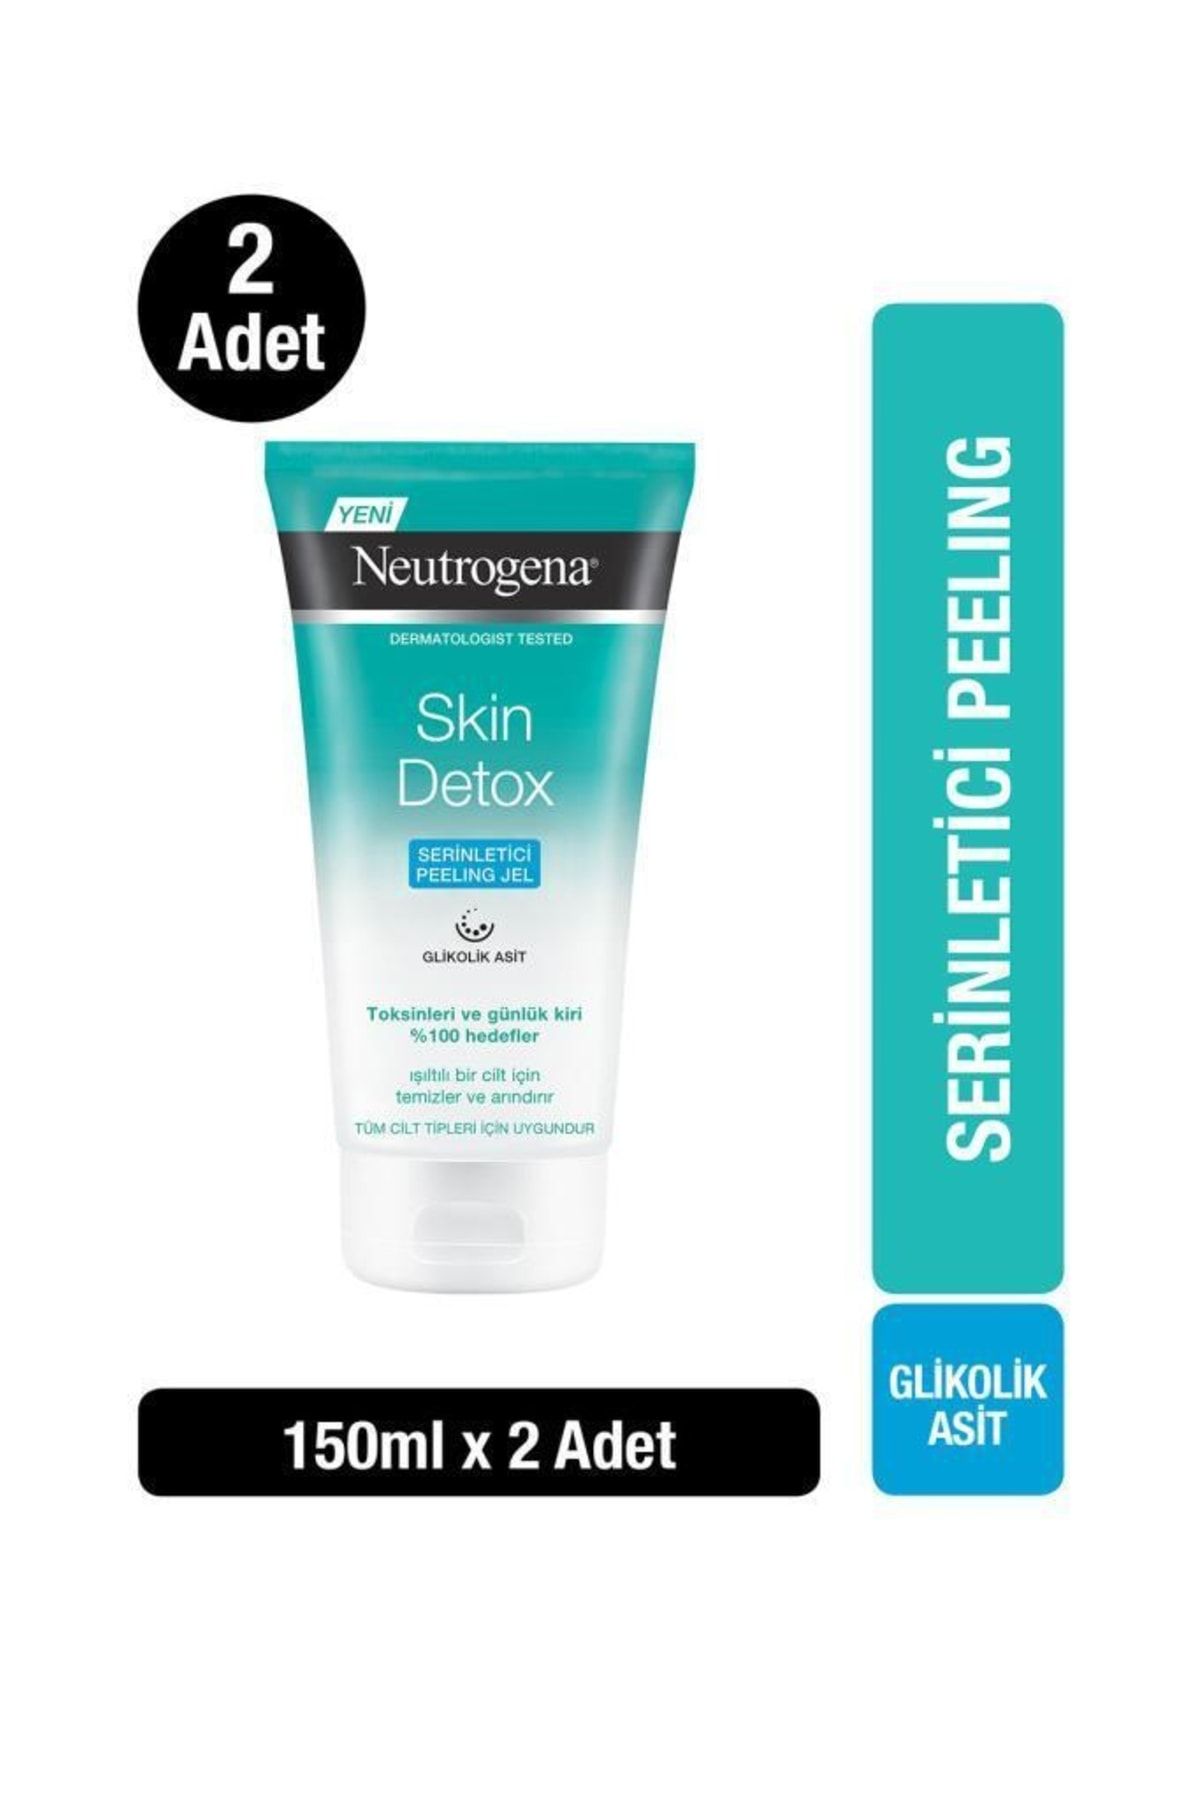 Neutrogena Skin Detox Serinletici Peeling Jel 150 ml X 2 Adet 35746614307202